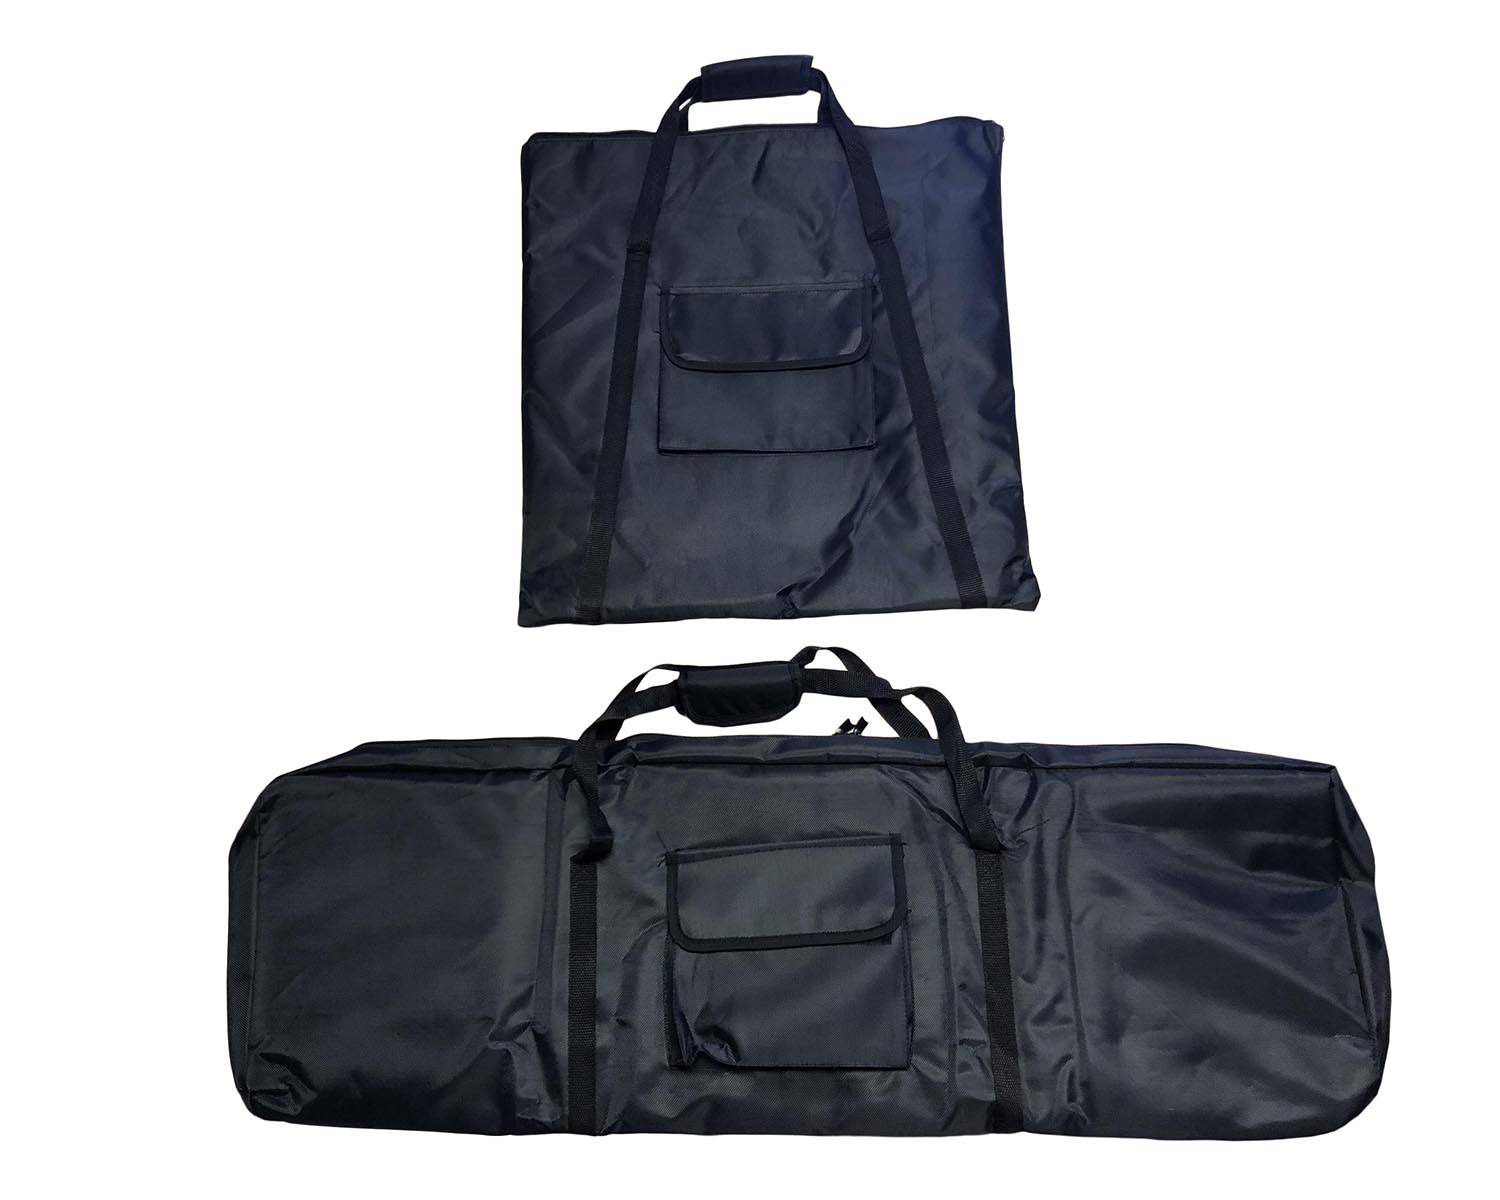 Novopro BAGPS1XL Premium Bag Set for PS1XL - Hollywood DJ